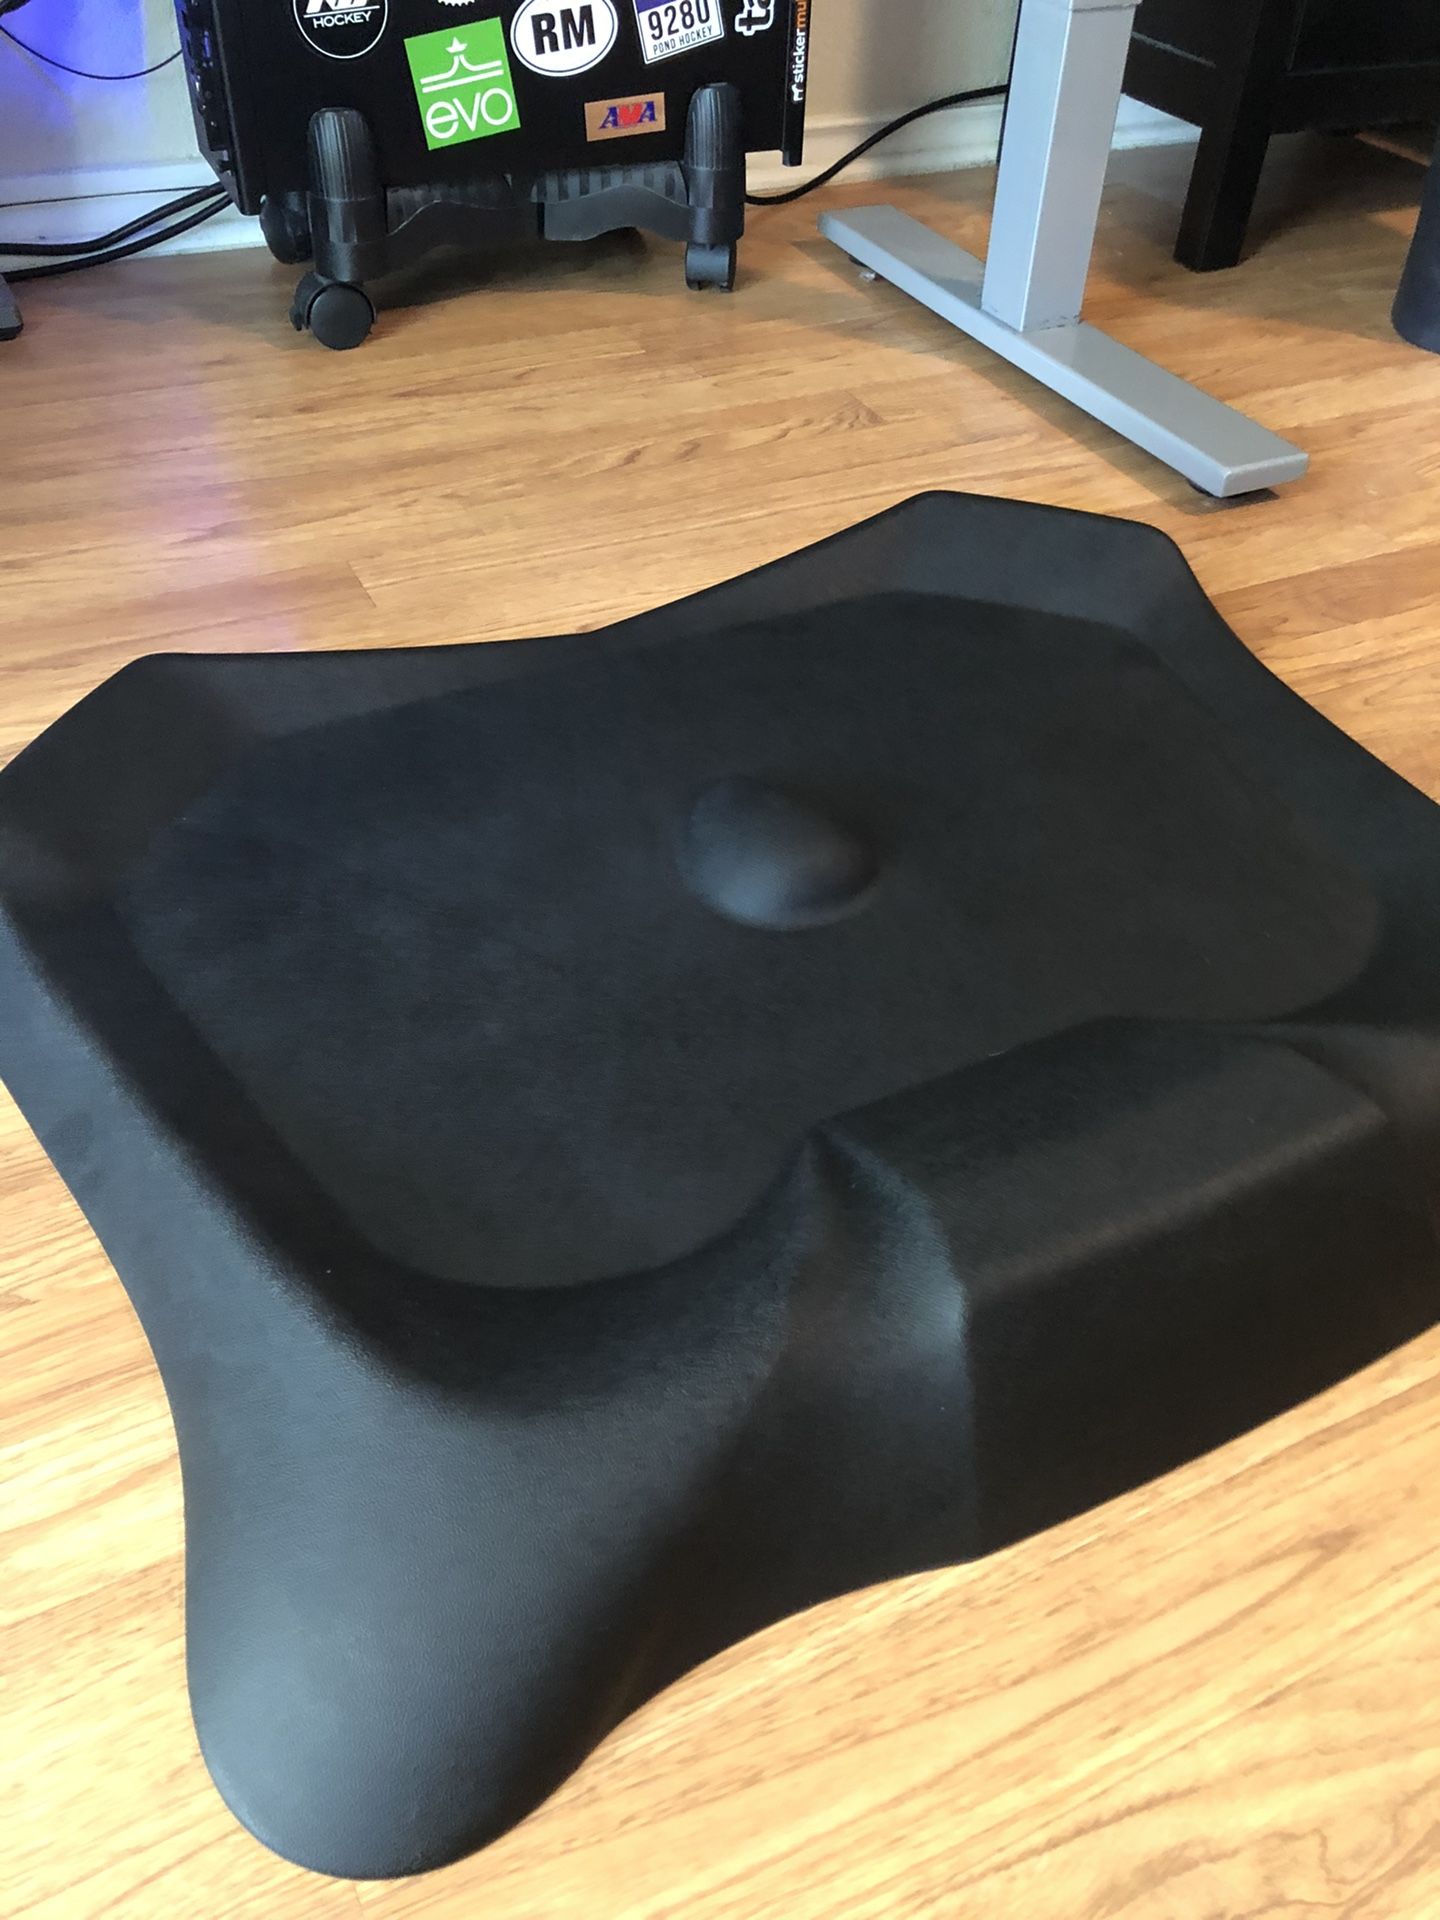 Standing Desk anti-fatigue mat - AKA my back saver